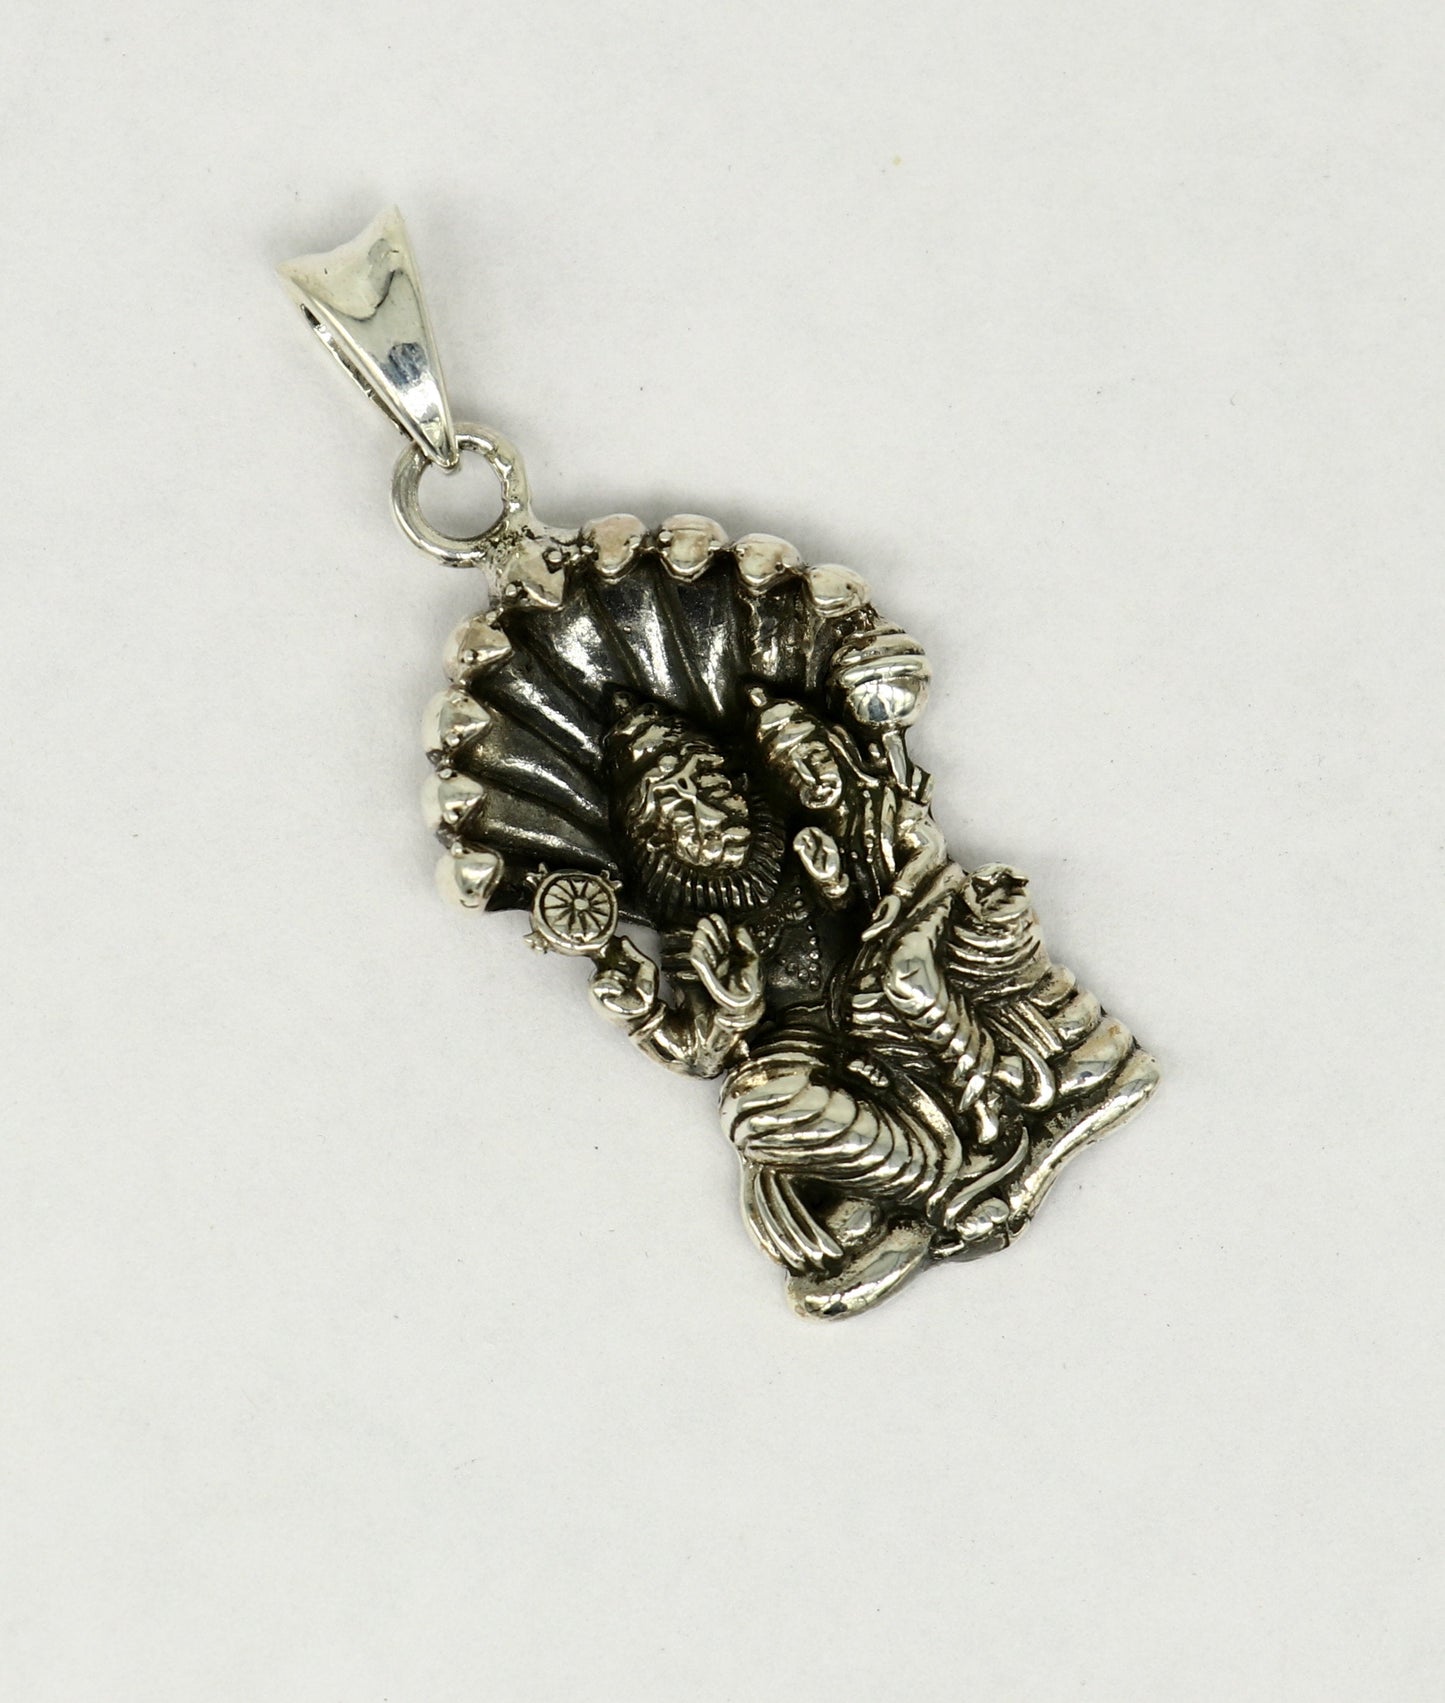 925 sterling silver handmade Vishnu with Laxmi (narsimha)pendant, amazing stylish unisex pendant locket personalized jewelry ssp445 - TRIBAL ORNAMENTS